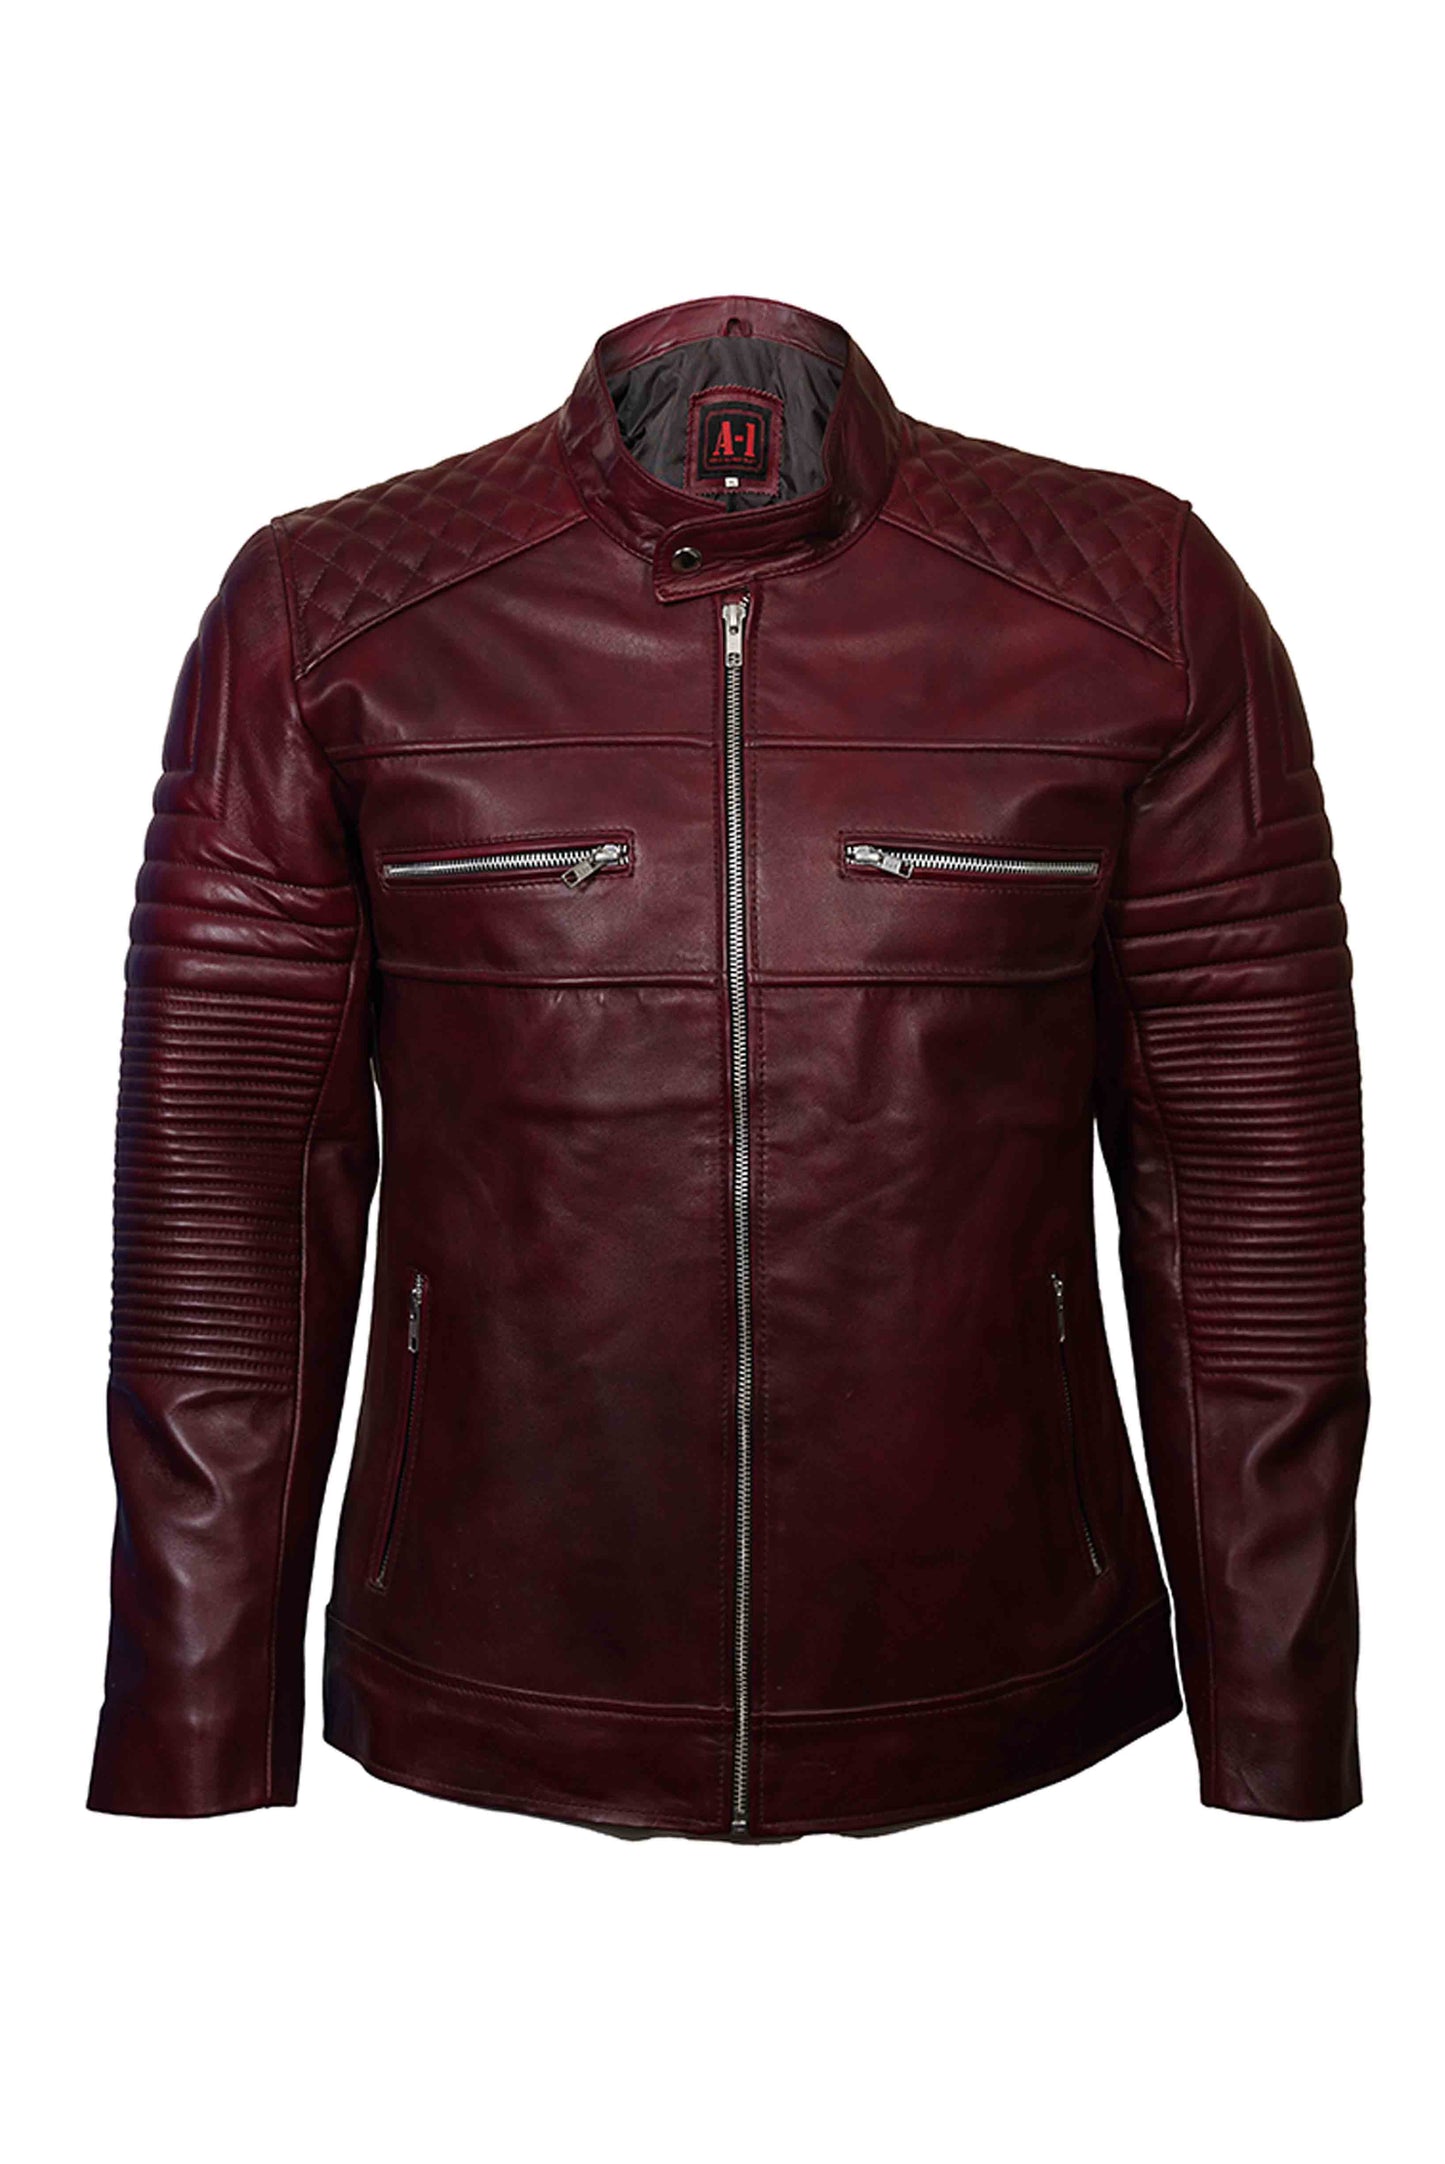 Buy Best Brown Leather Jacket